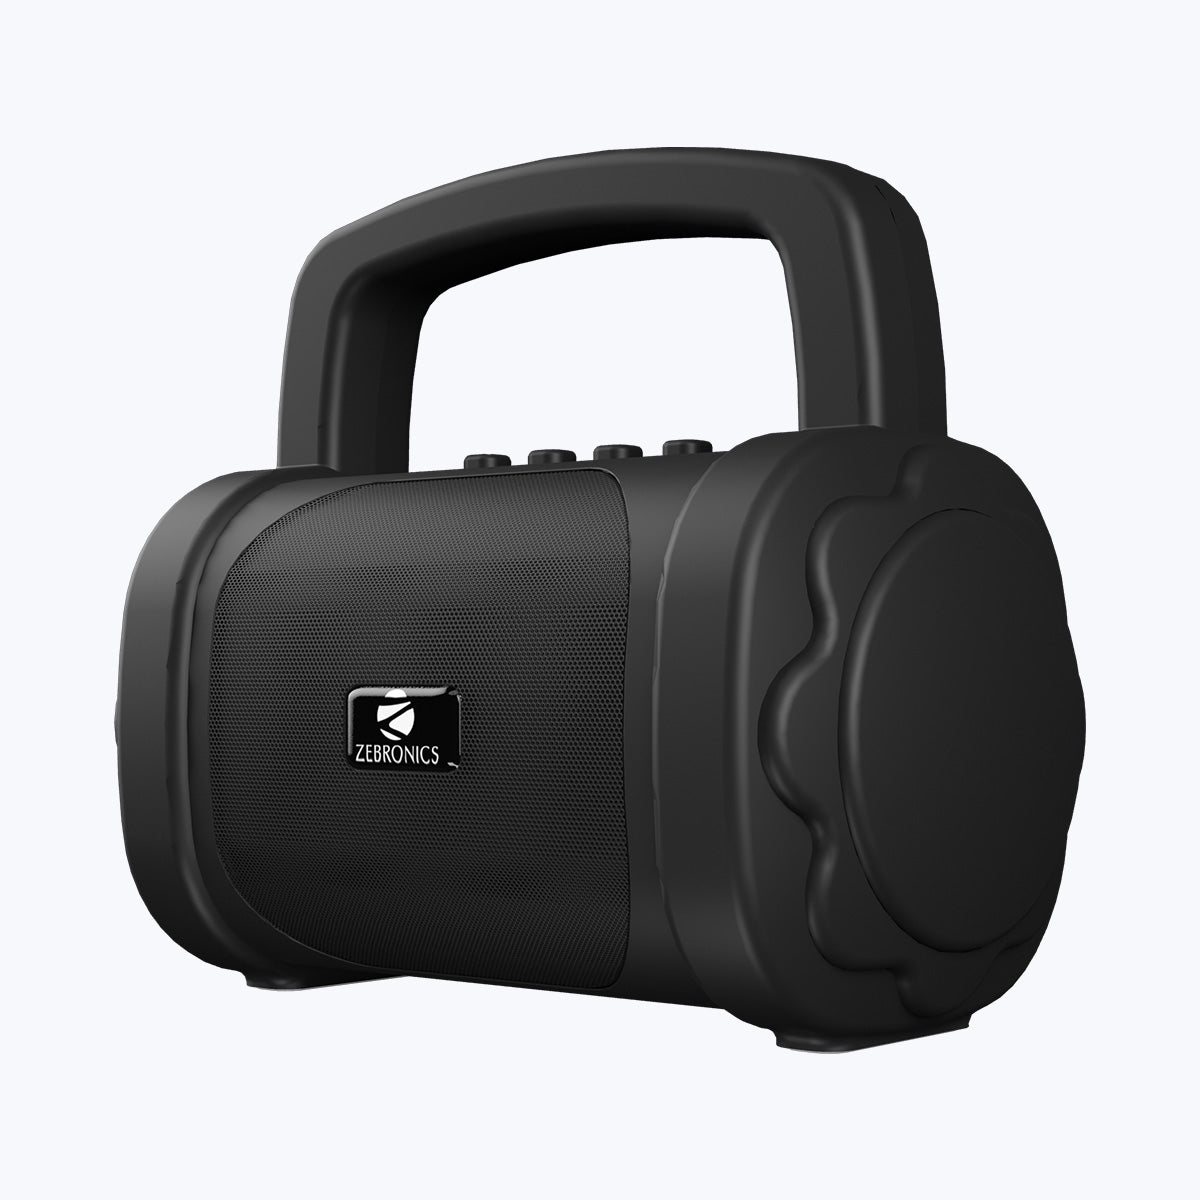 Zeb-County 3 - Wireless Portable Speaker - Zebronics